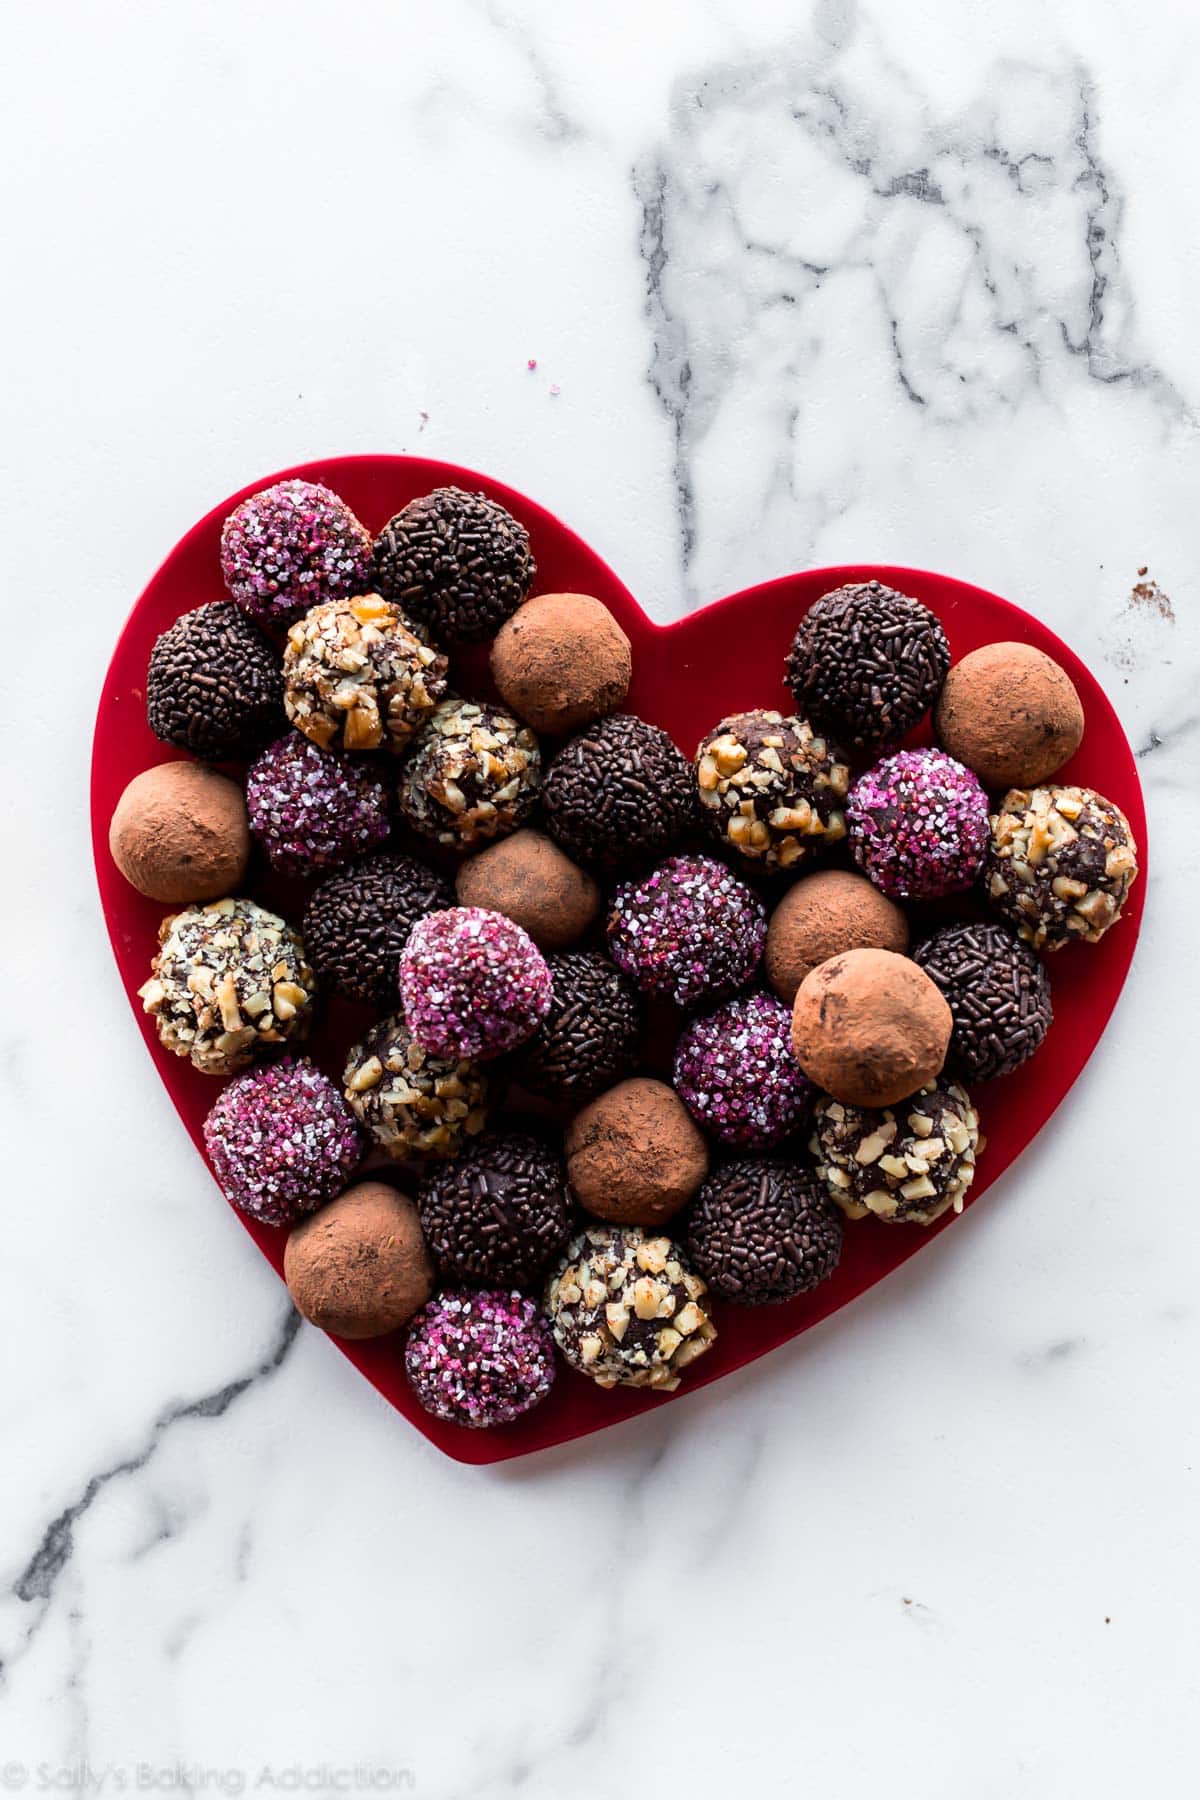 Homemade chocolate truffles on Valentine's Day heart plate